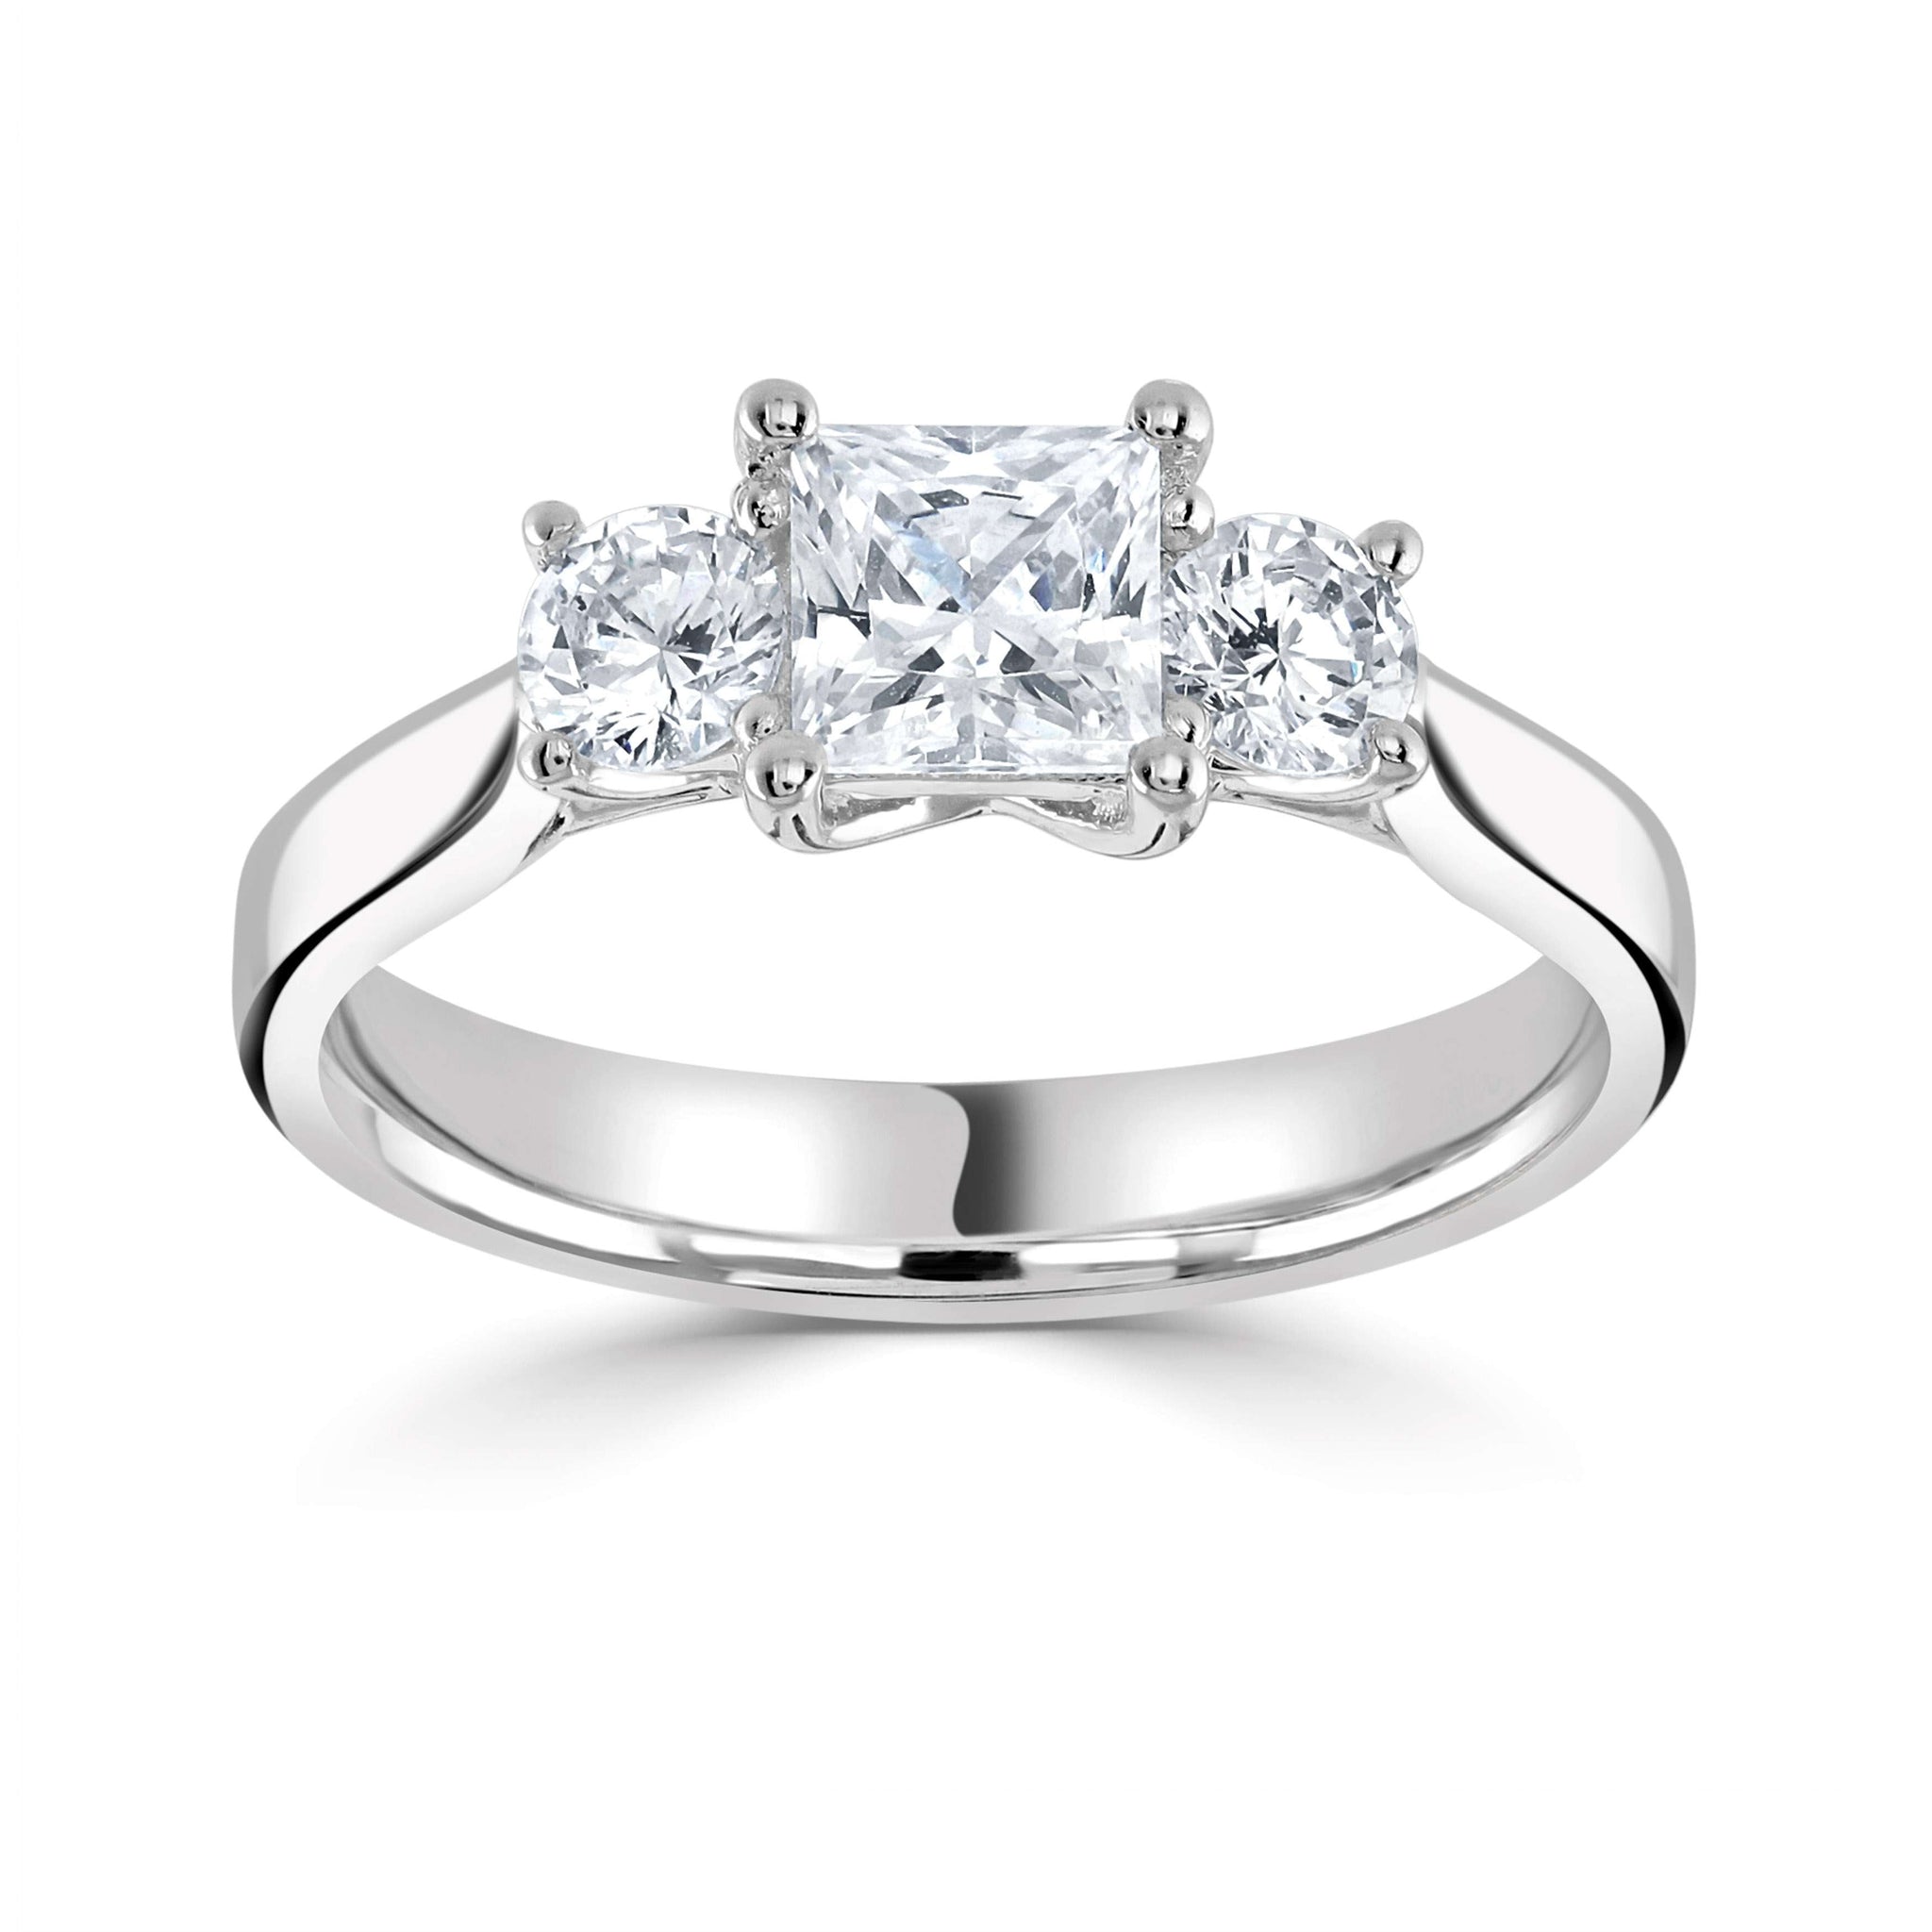 Nylah *Select a Princess Cut Diamond 0.25ct or above